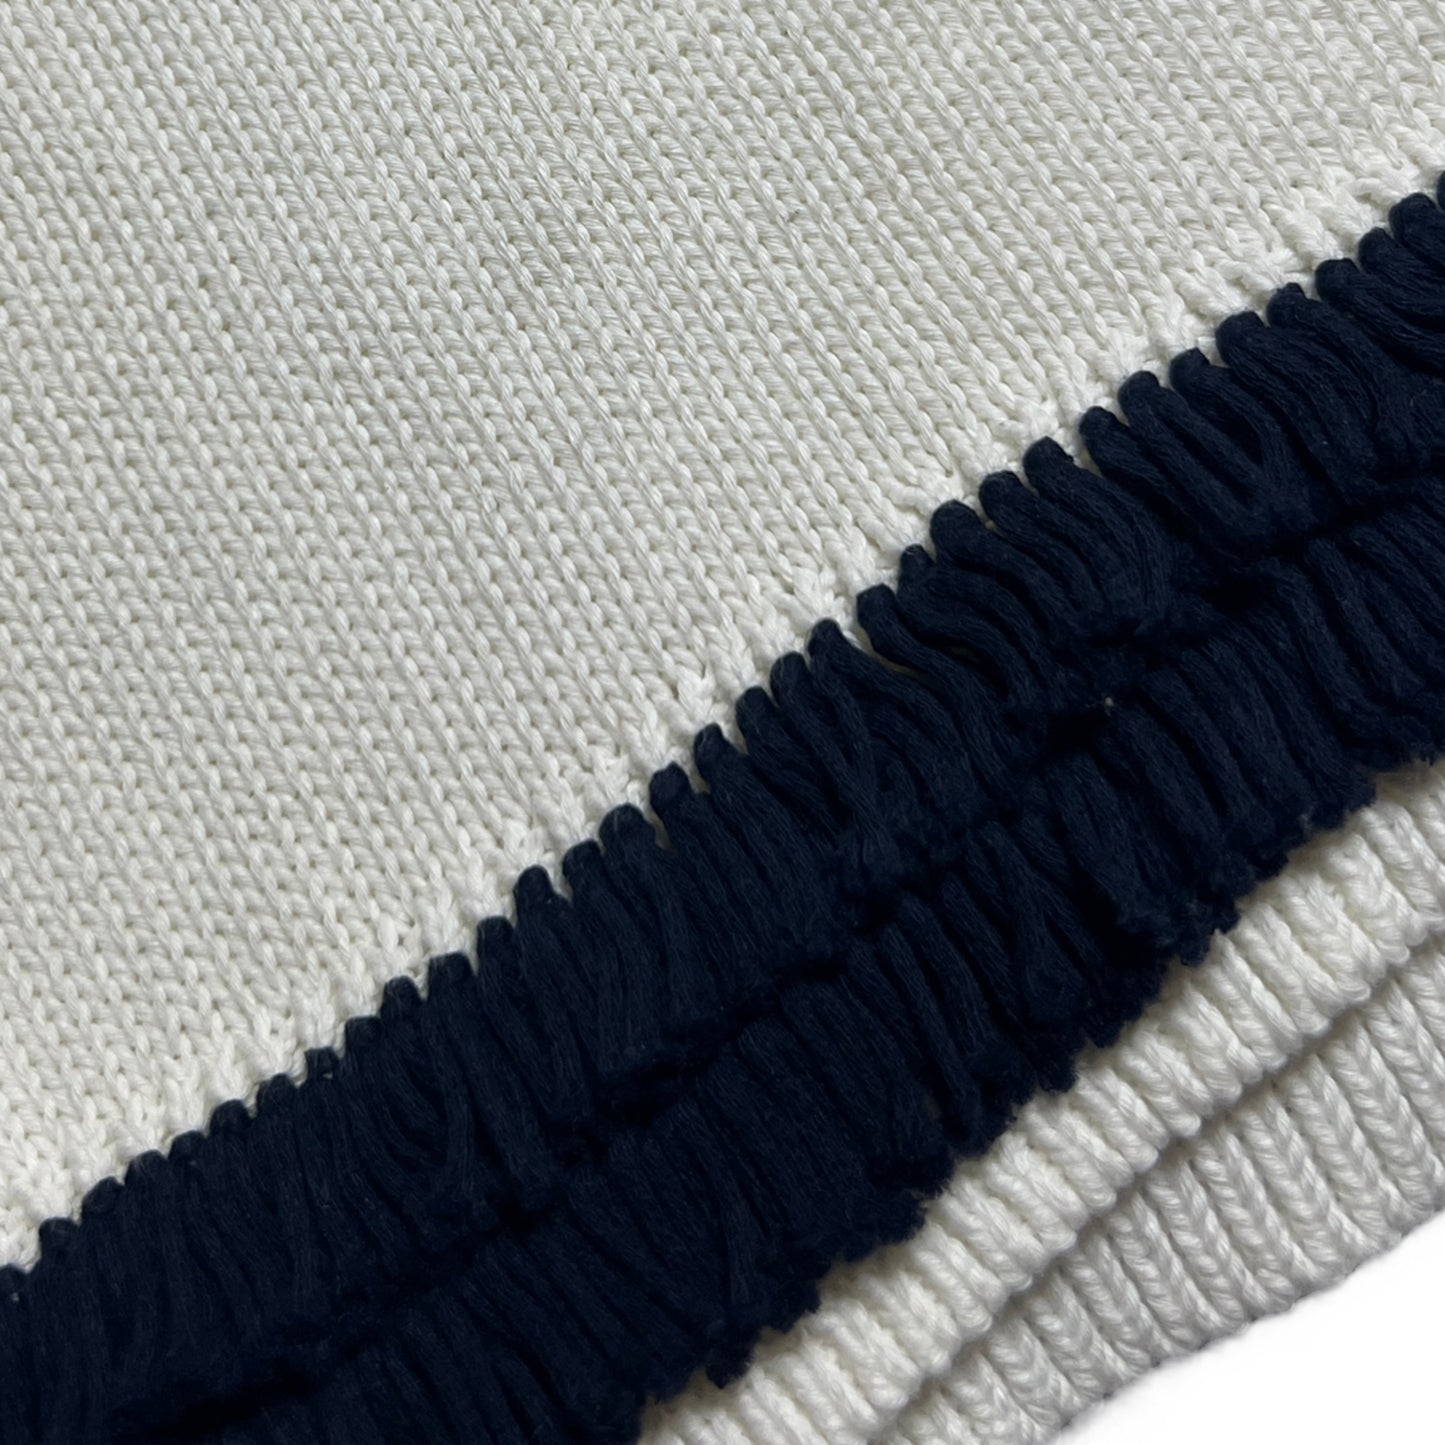 4/5 CC knit top